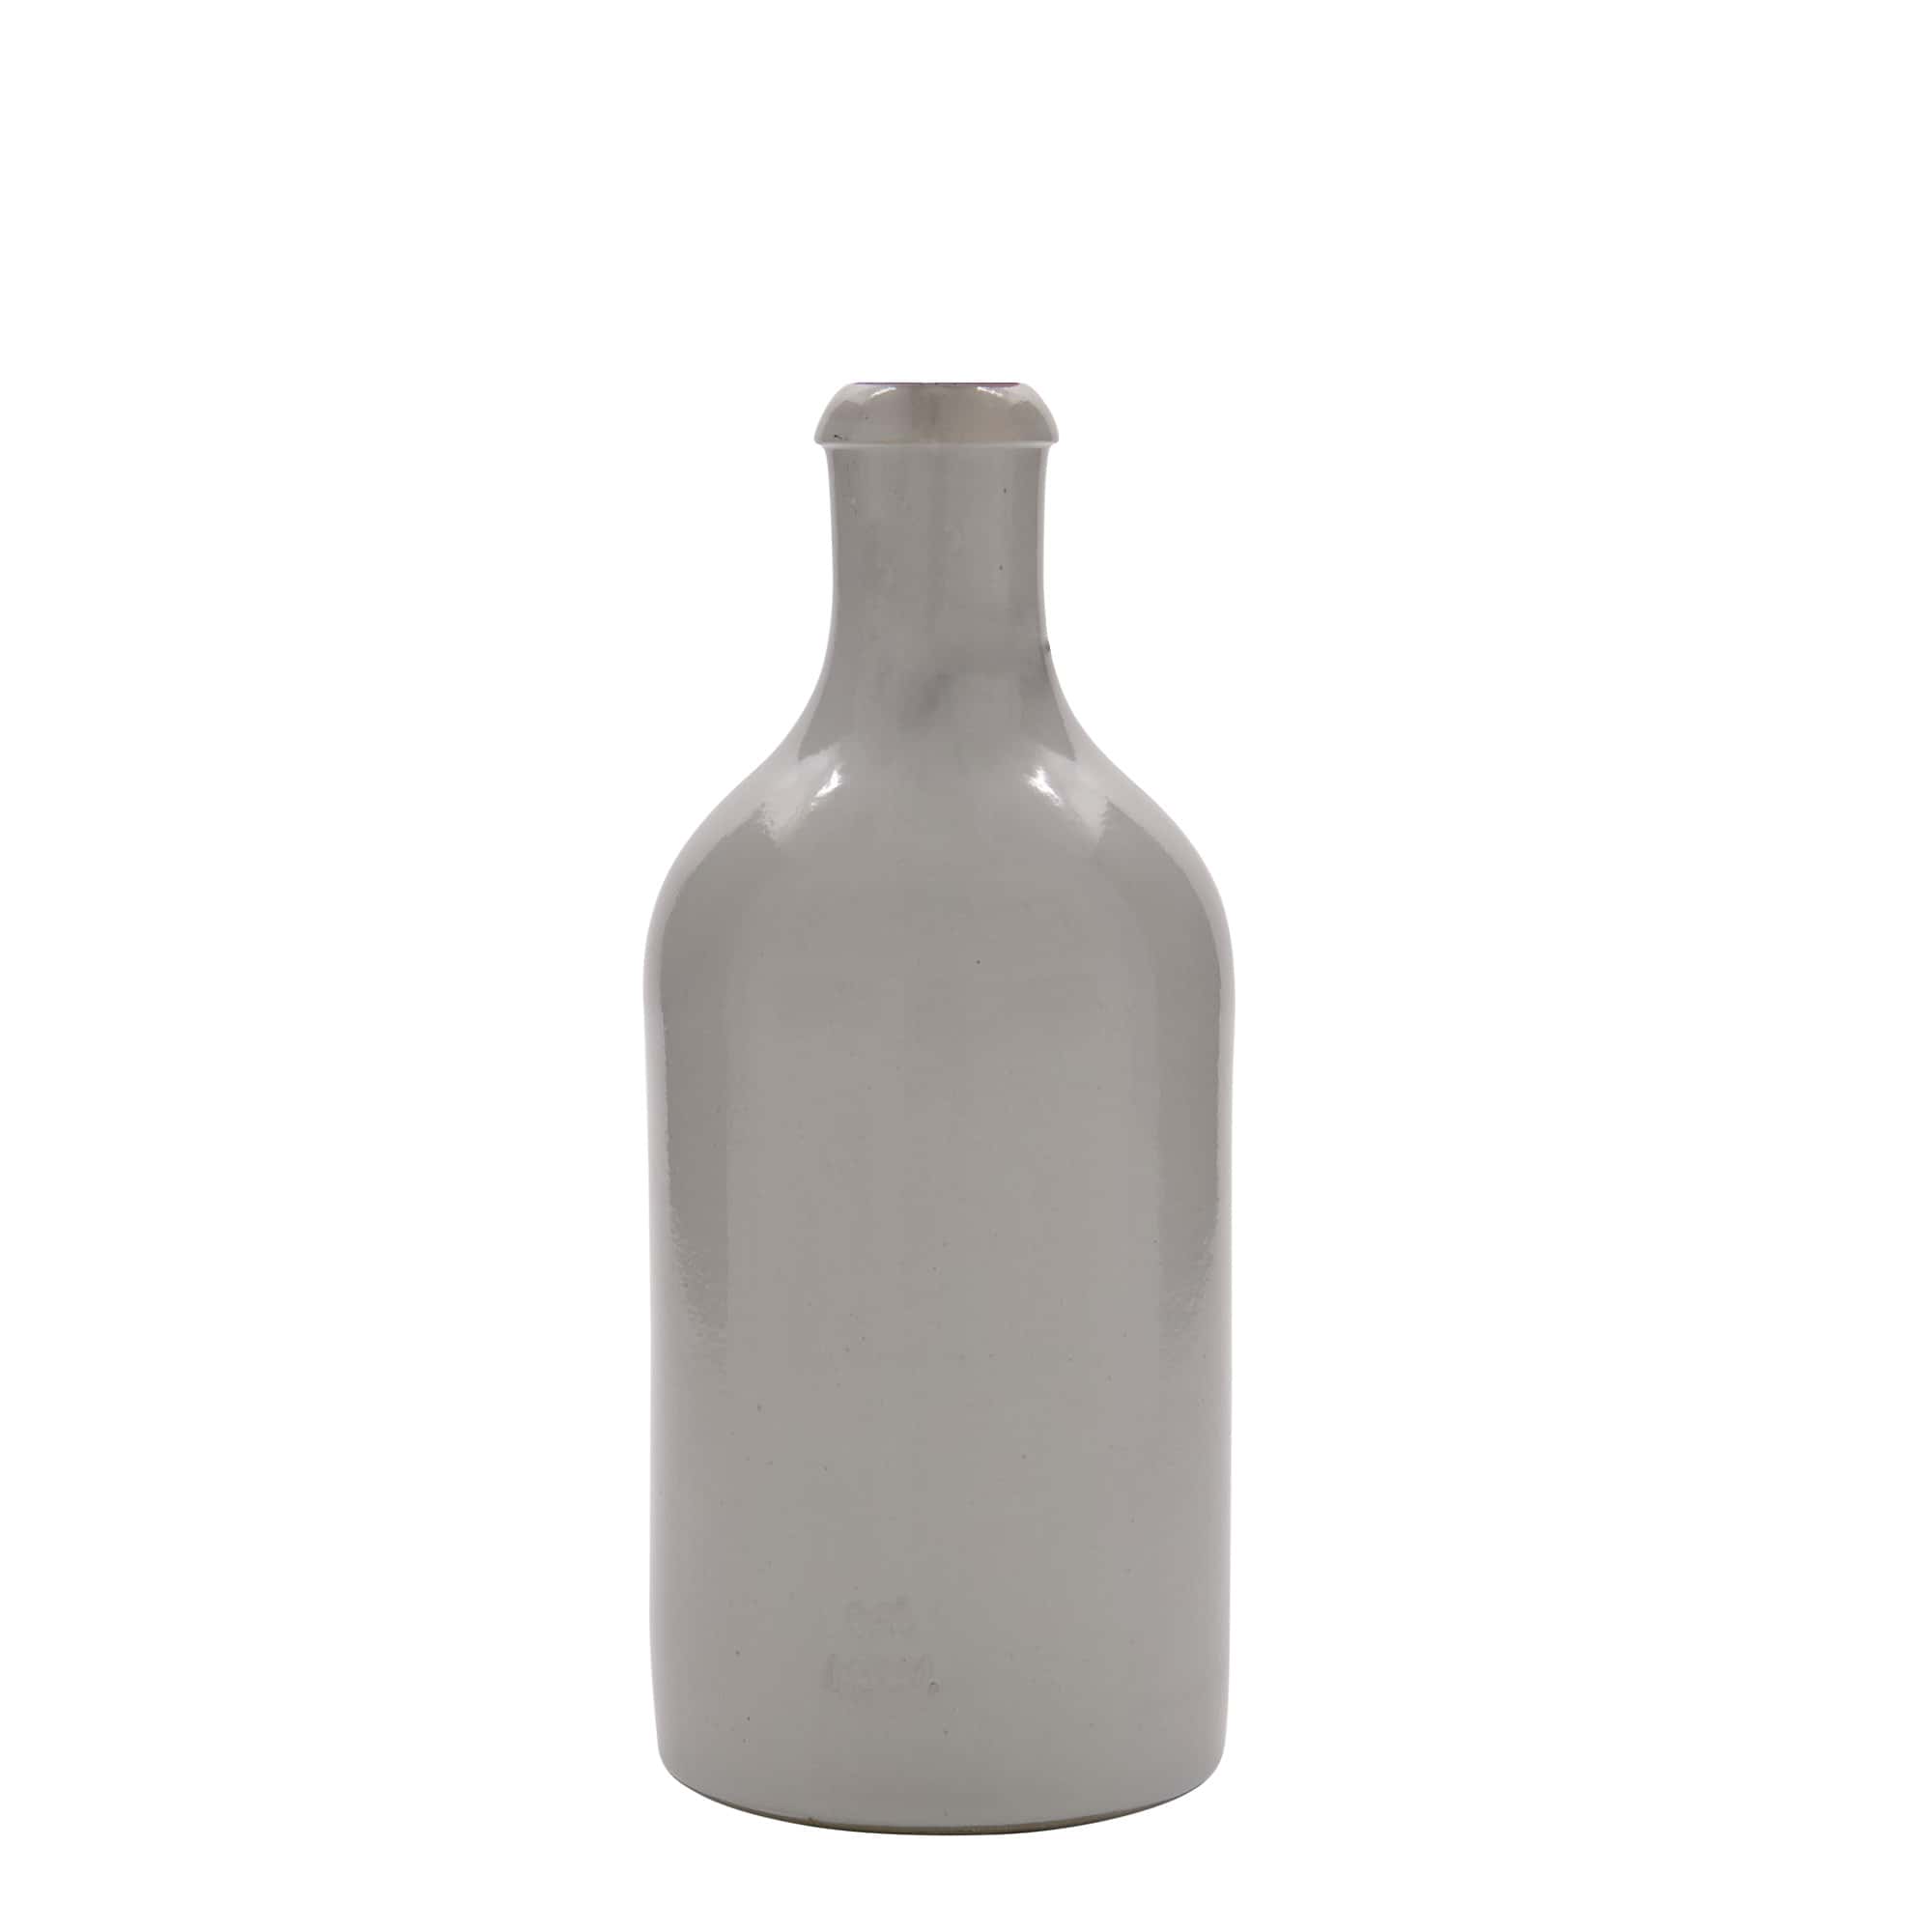 500 ml earthen jug, stoneware, white, closure: swing top